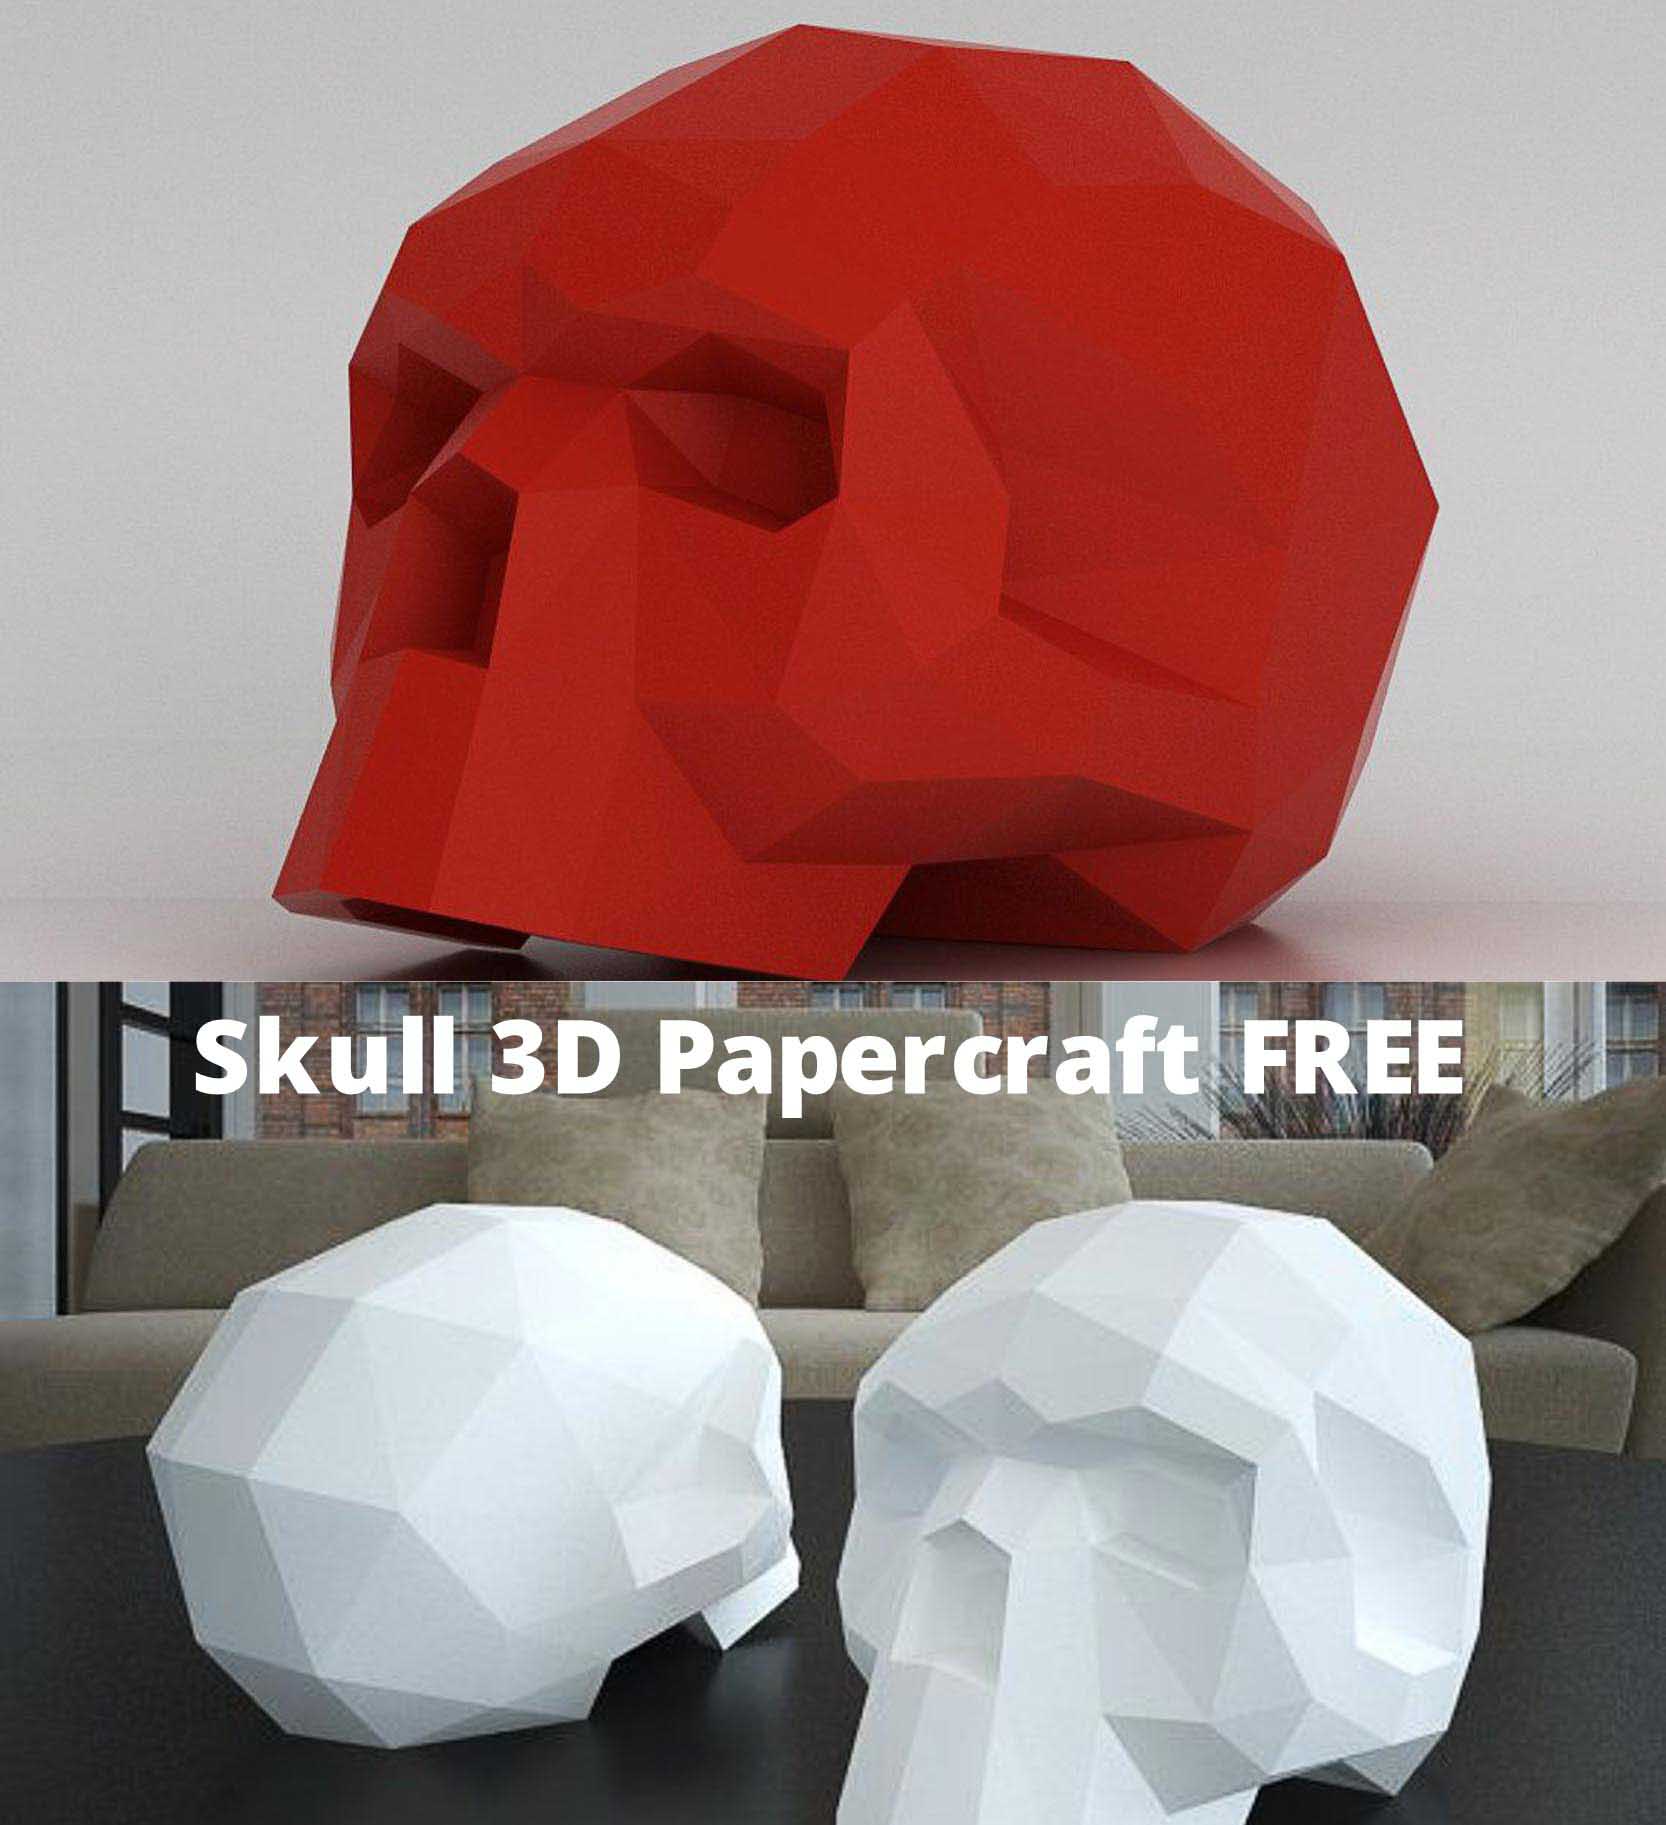 Skull 3D Papercraft Free Free download